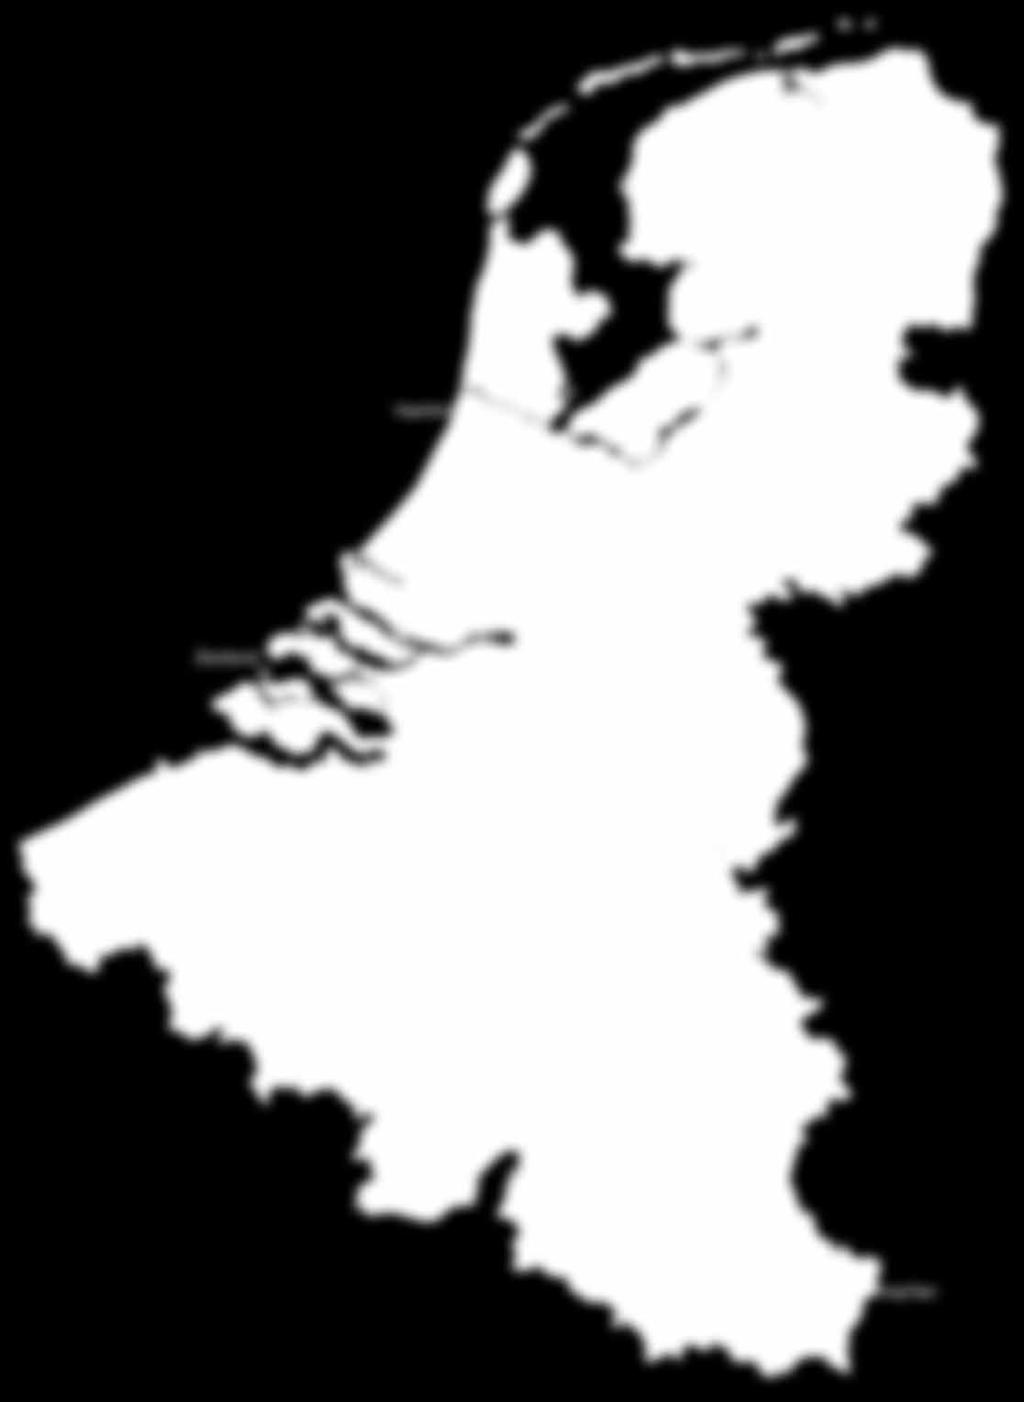 Benelux Contactgegevens rmsanitair.nl easydrain.